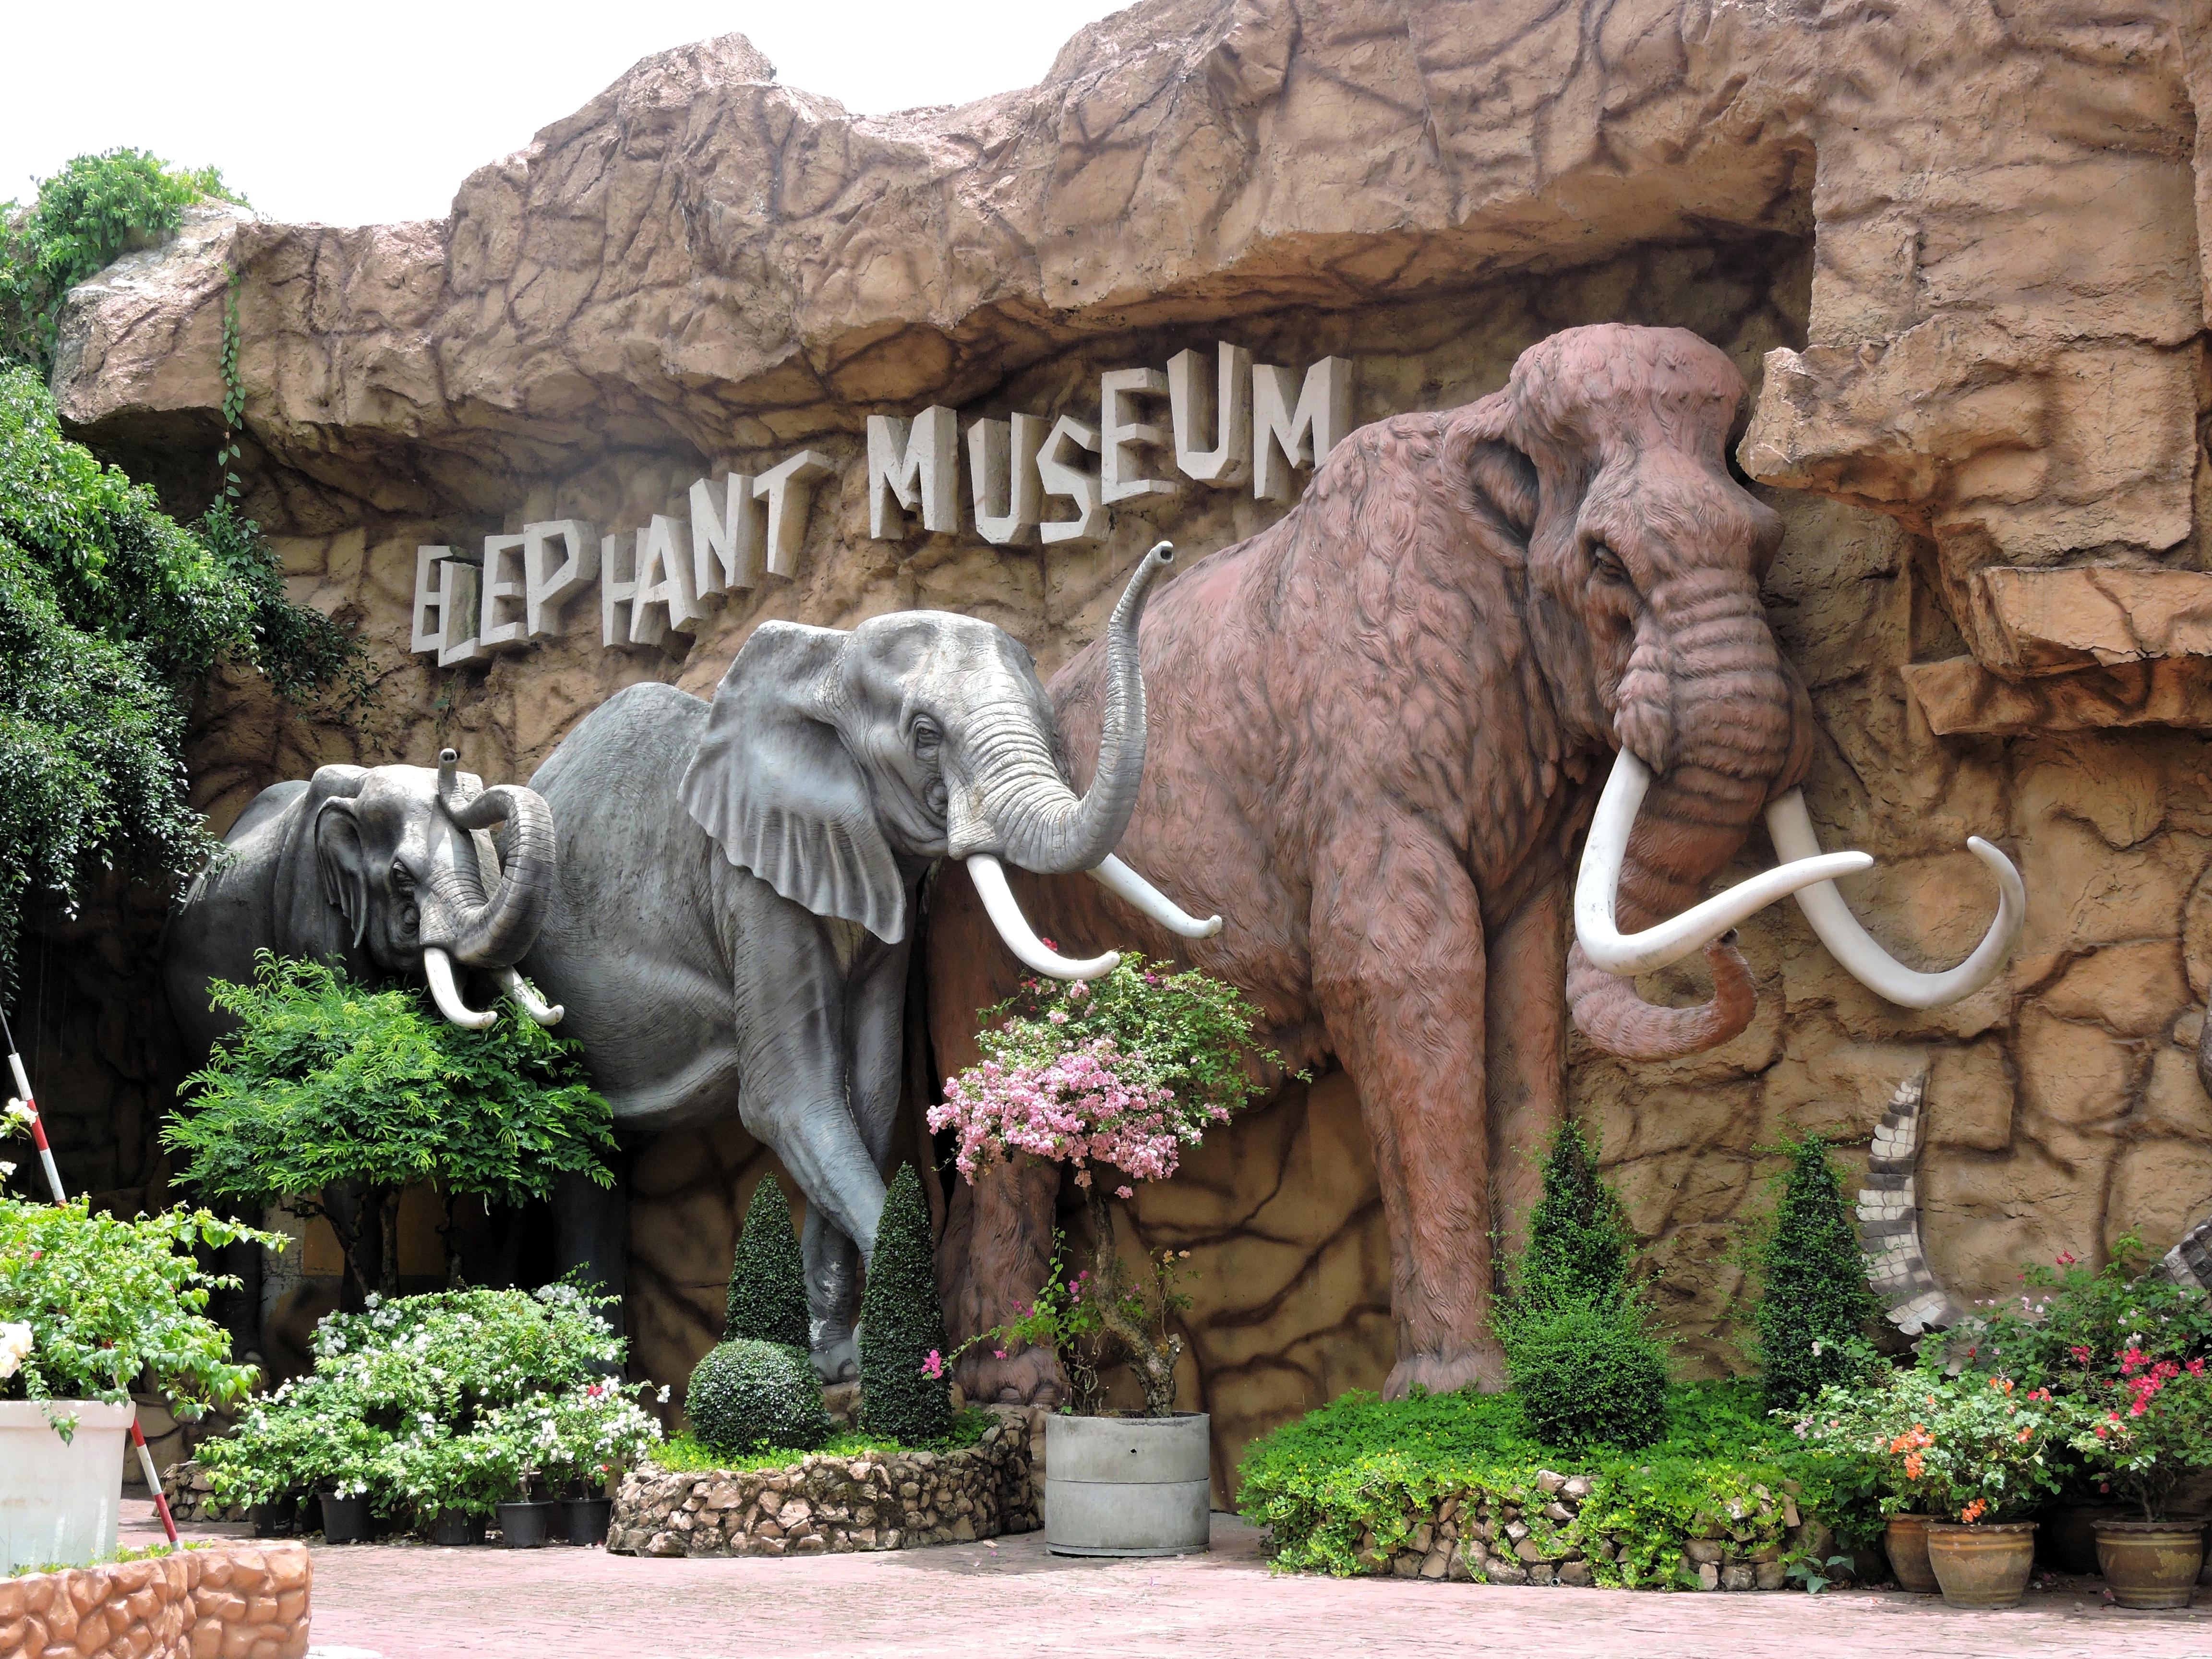 Visit the Elephant Museum